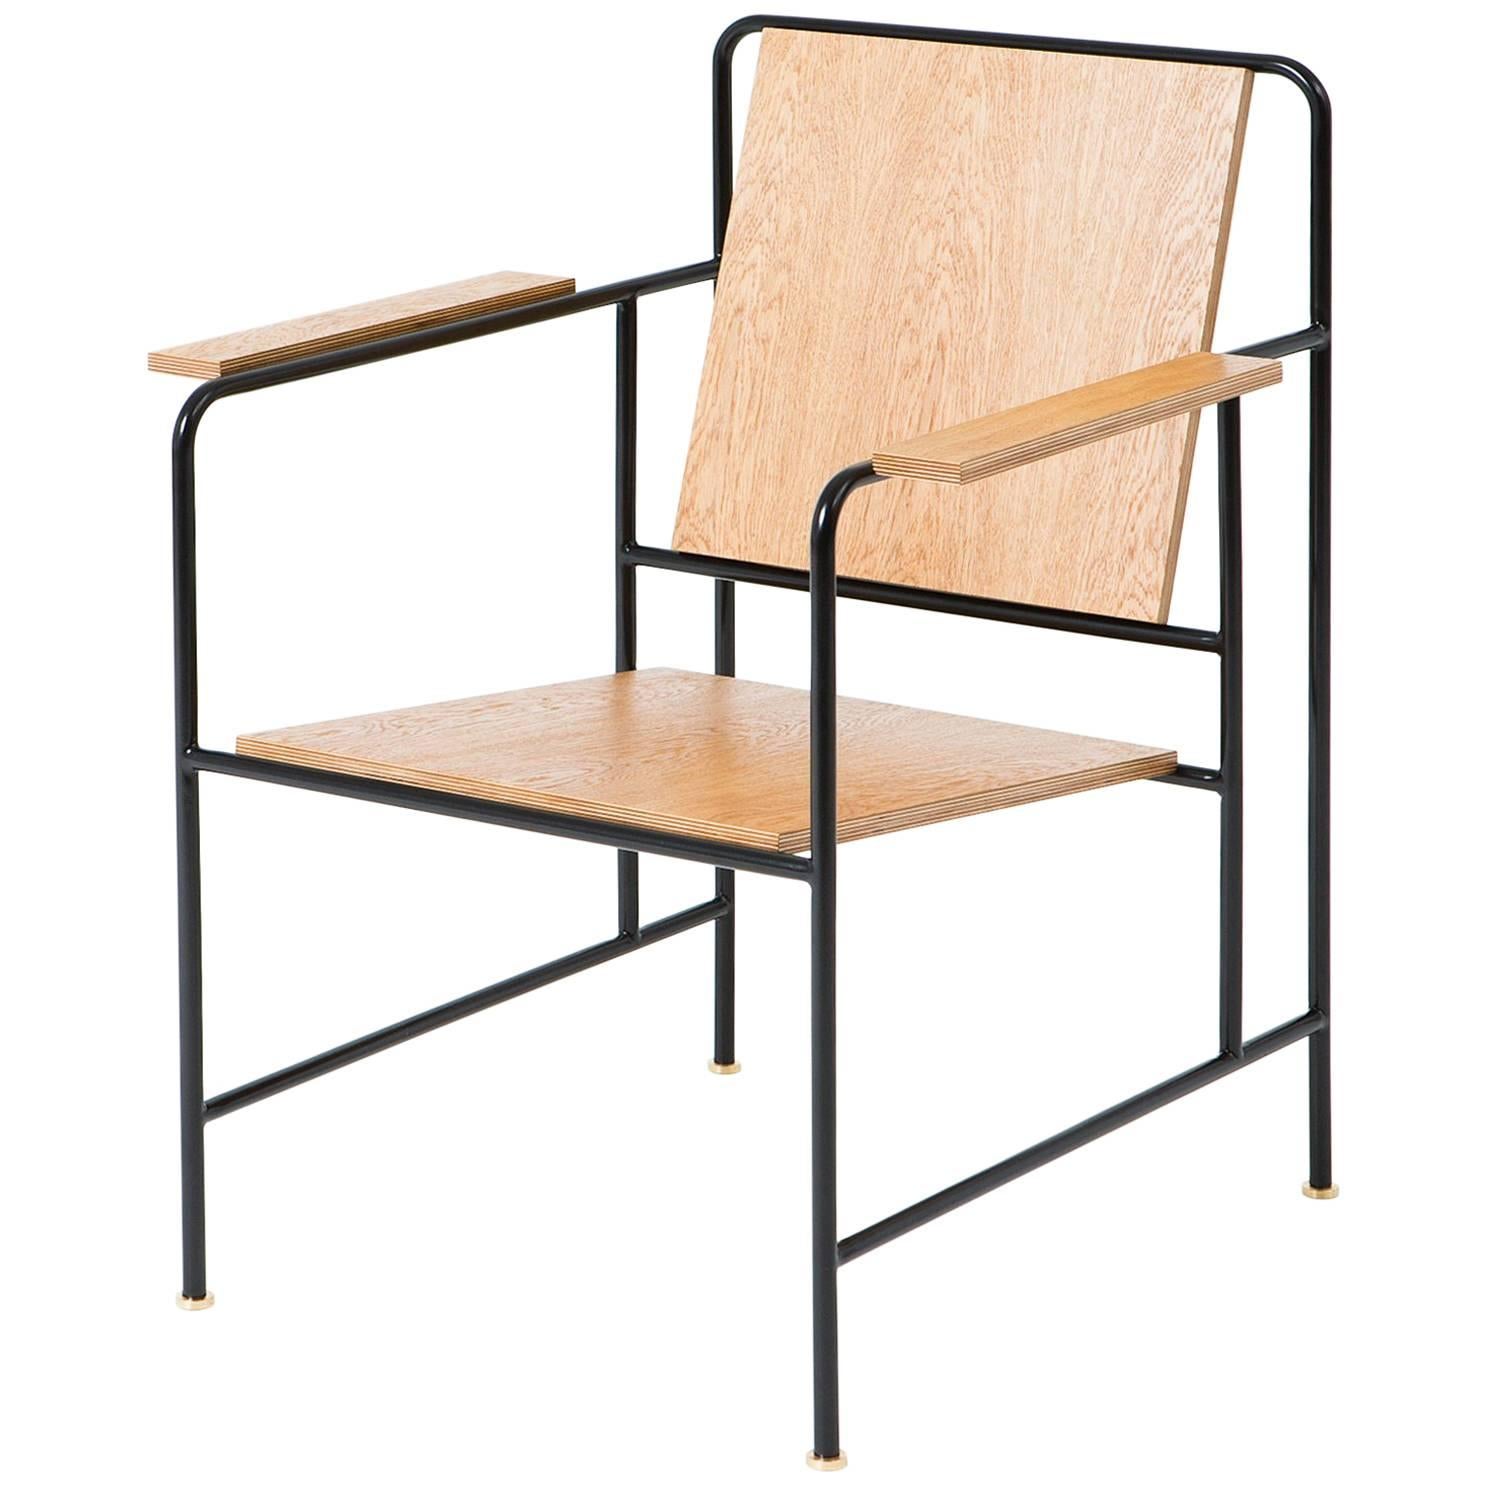 M Armchair 'Oak veneer and Metal structure' - Le Corbusier inspiration For Sale